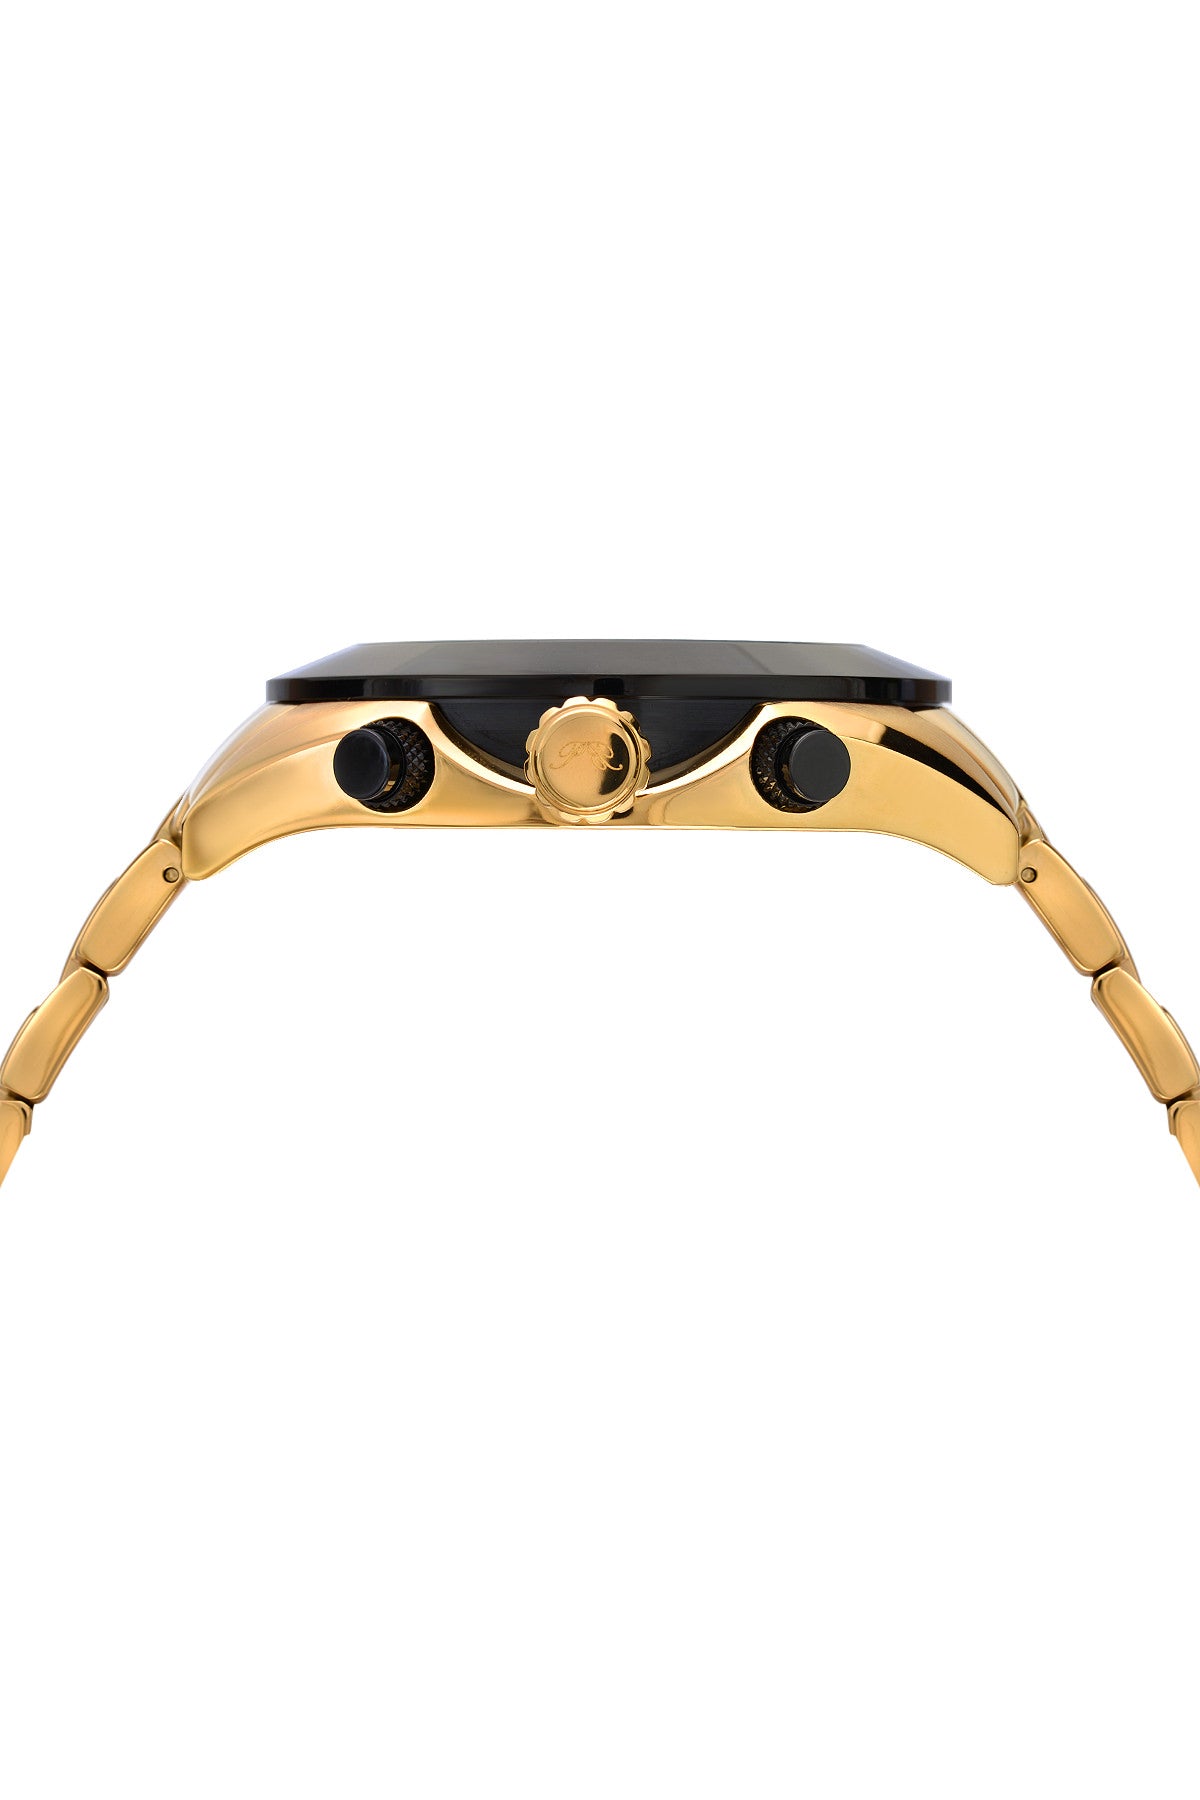 Porsamo Bleu Pascal luxury chronograph men's stainless steel watch, gold, black 262APAS